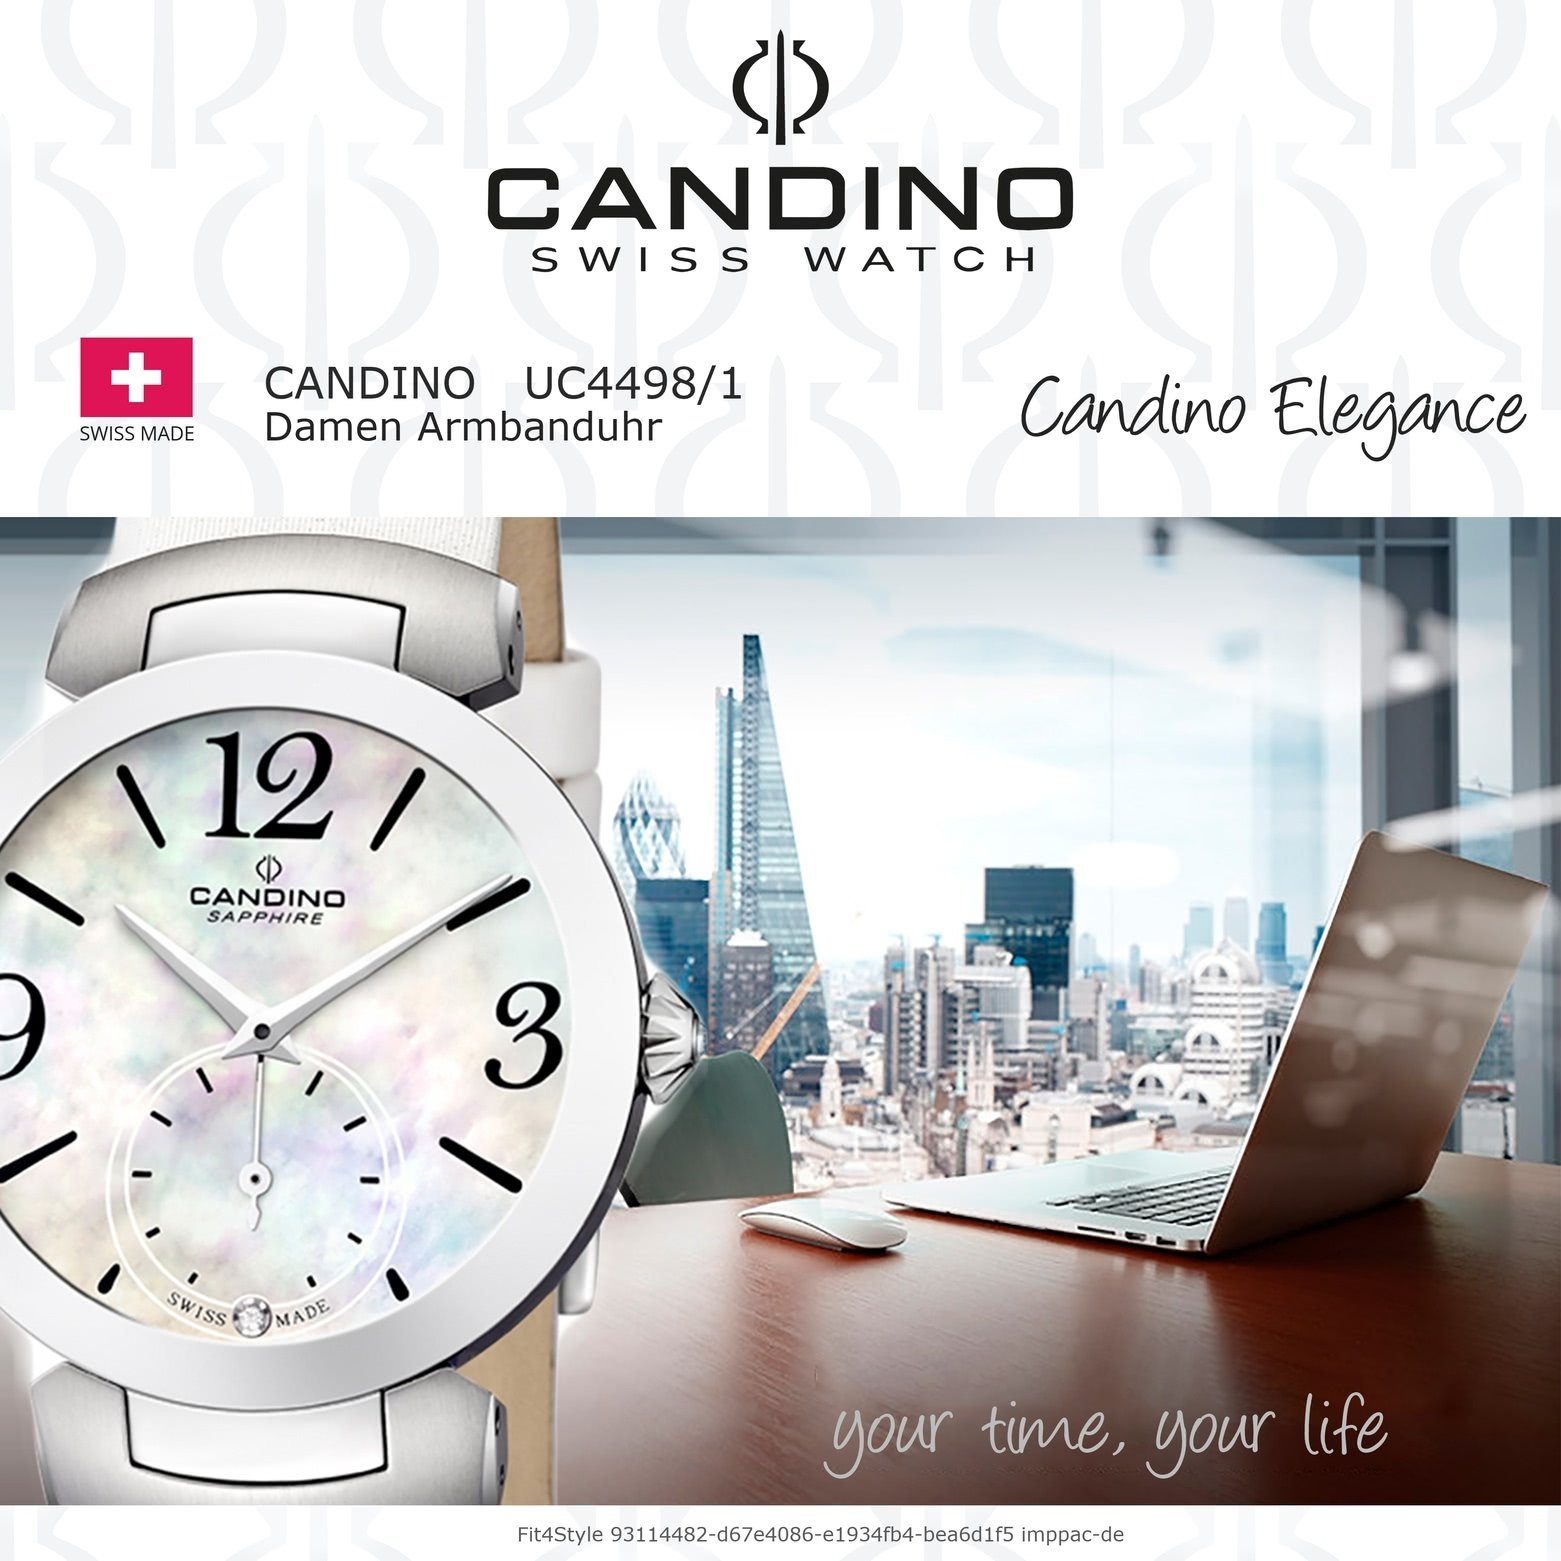 Damen weiß, C4498/1, Candino Armbanduhr Candino Quarzuhr Lederarmband Analog Elegant rund, Quarzuhr Damen